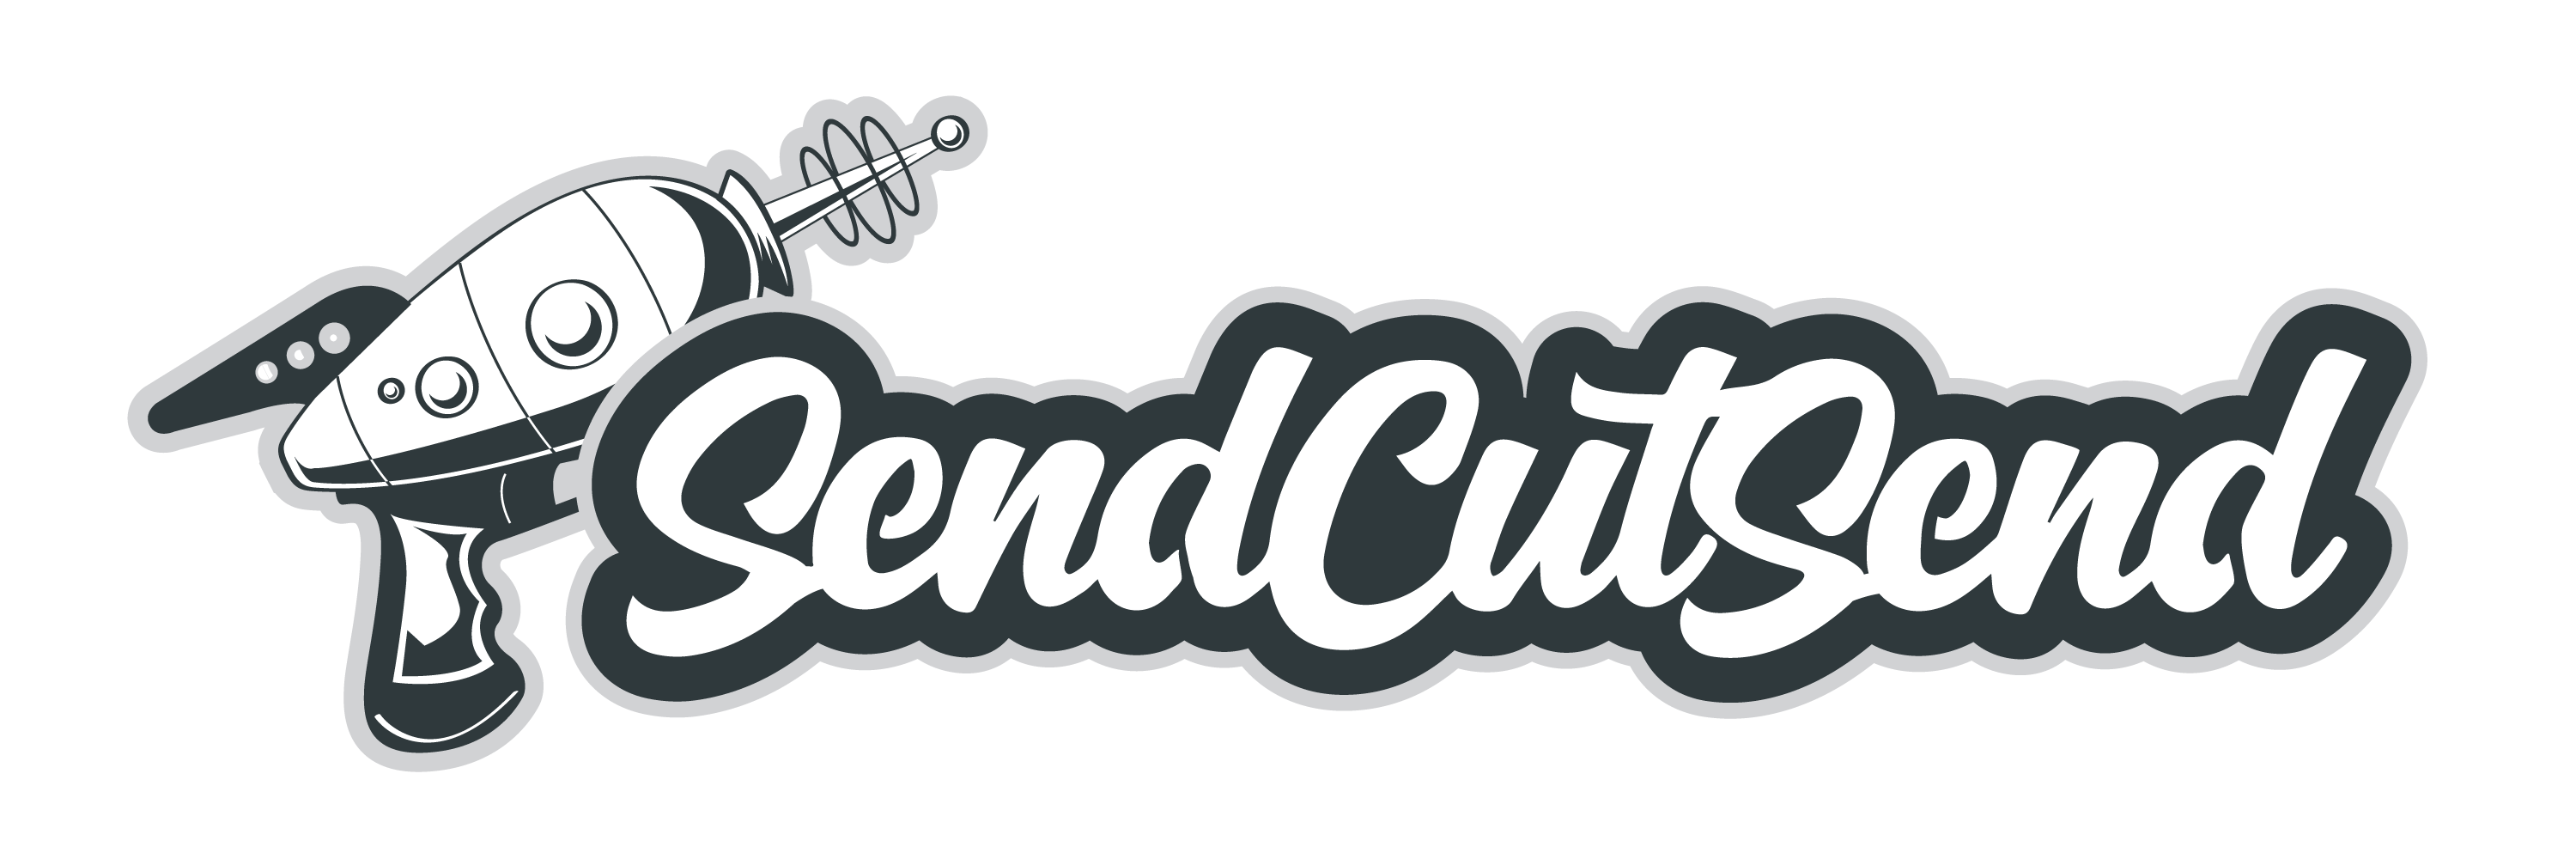 SendCutSend logo